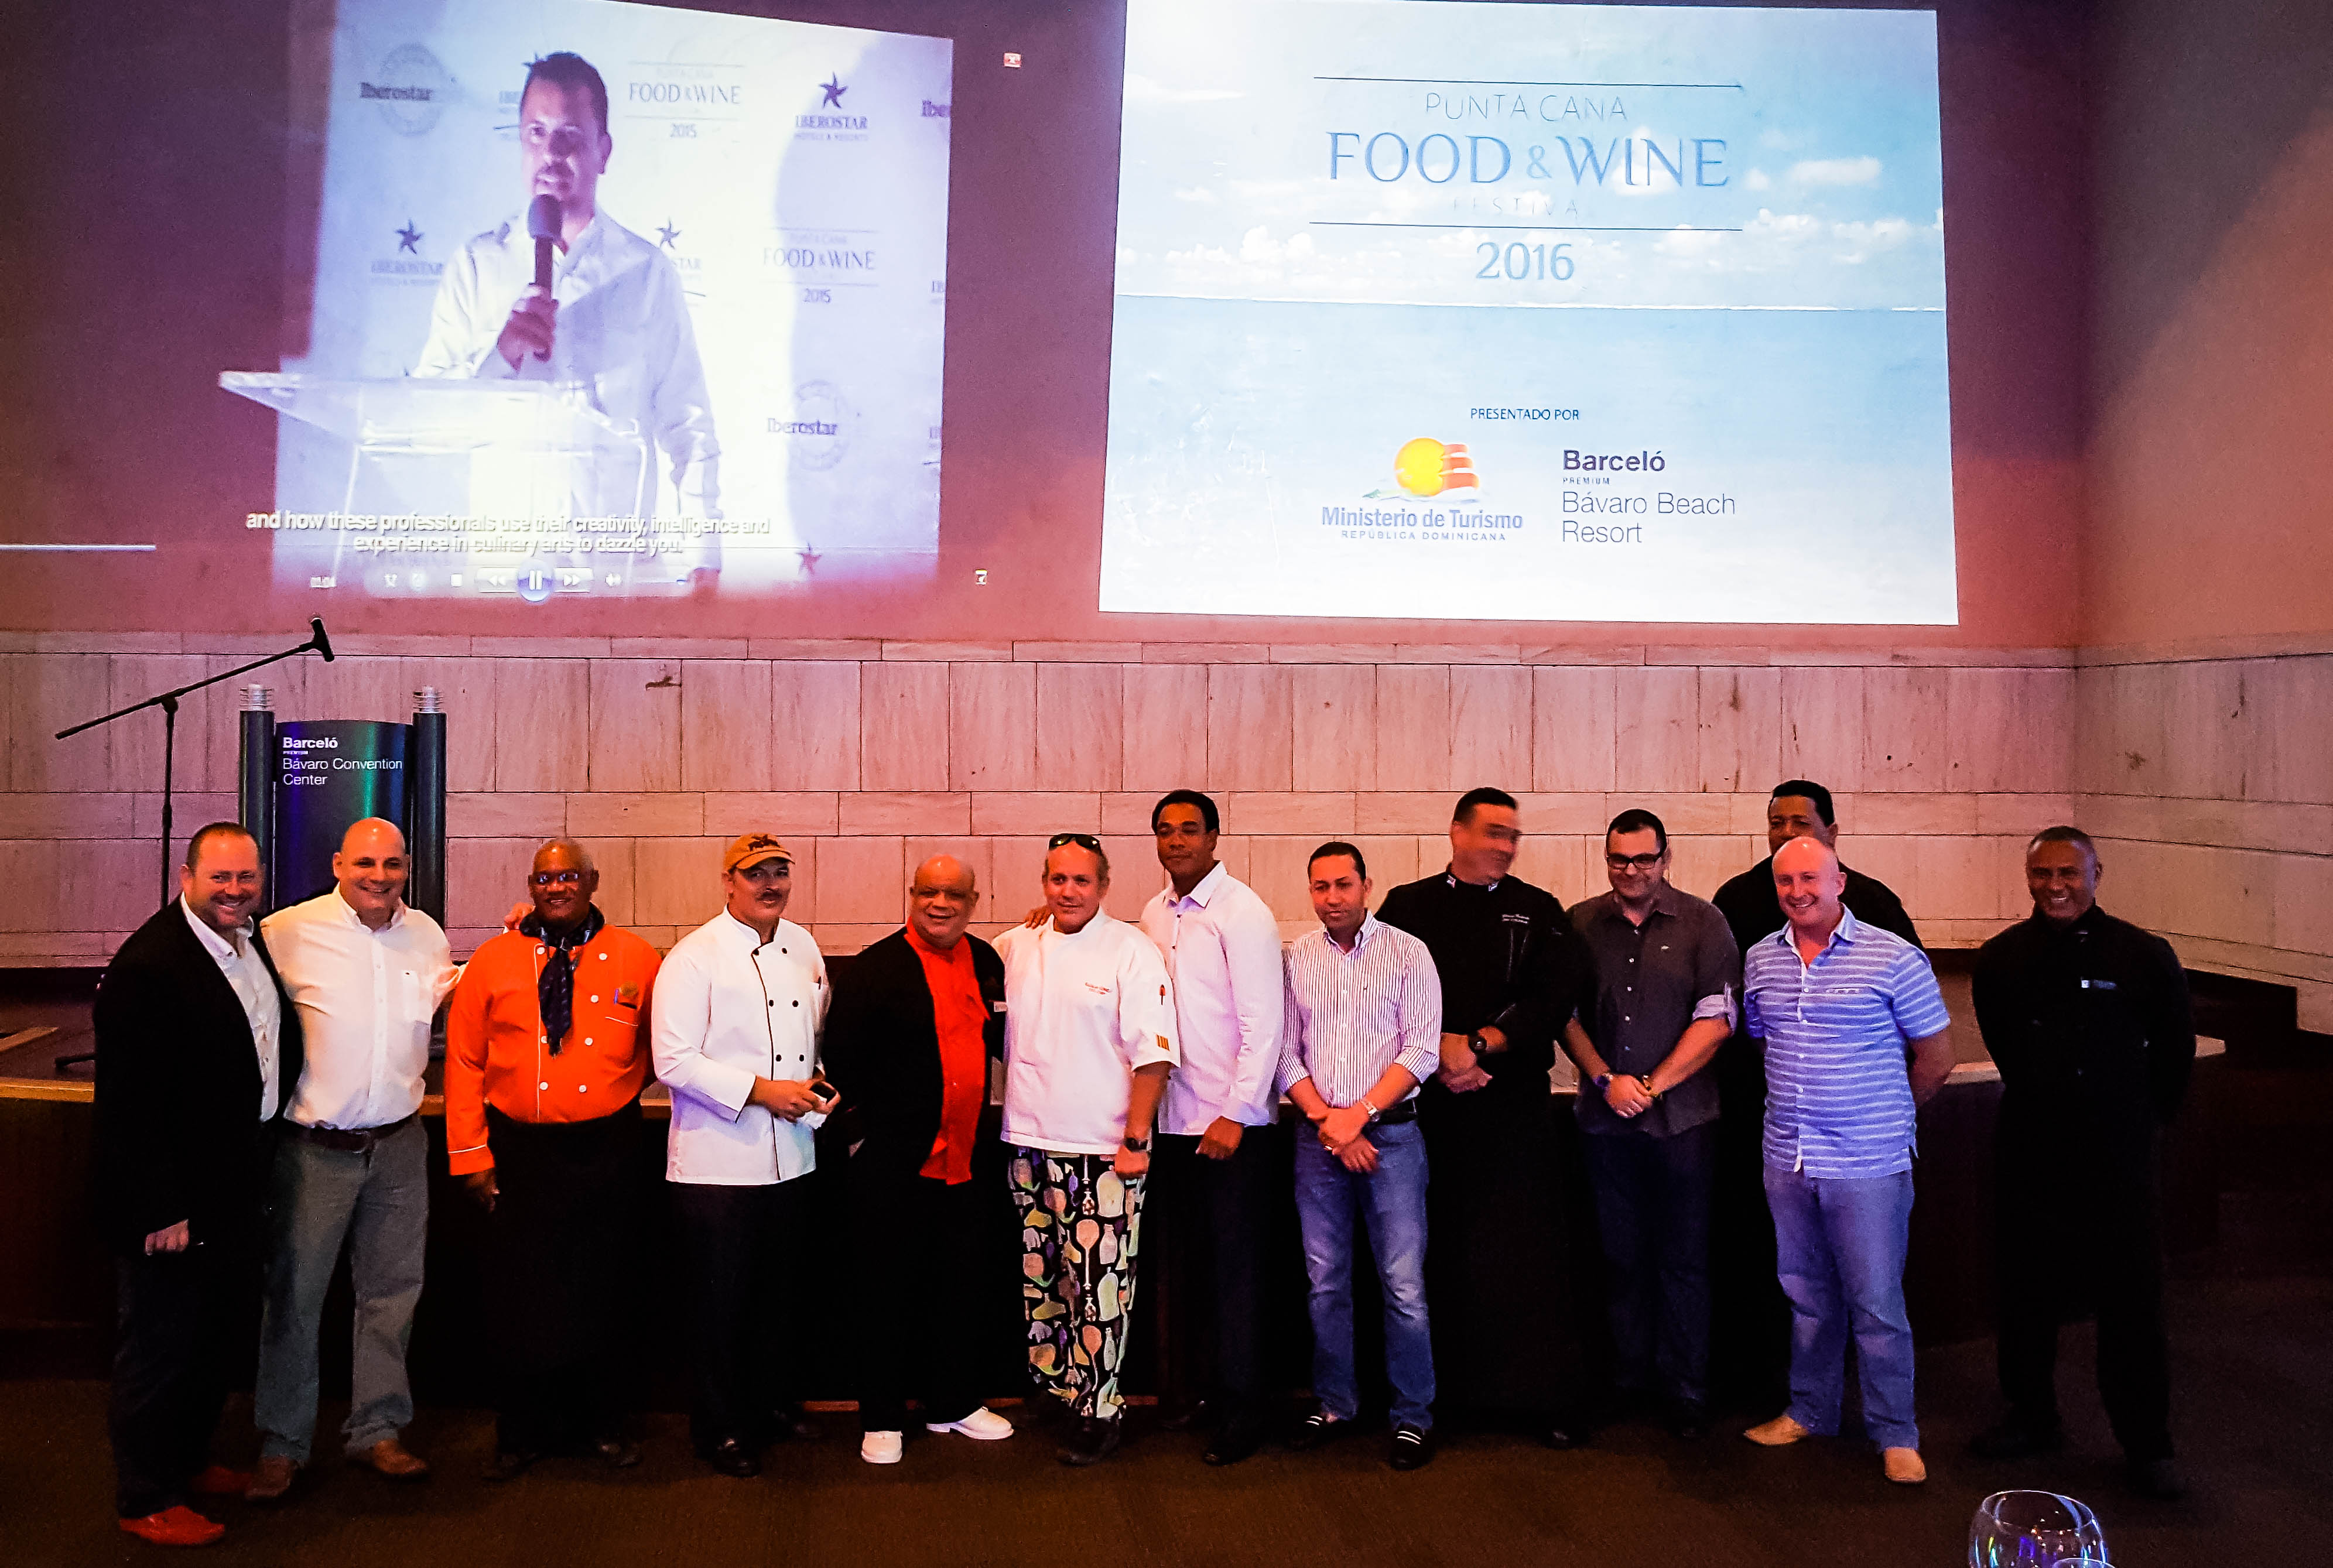 Punta Cana Food & Wine Festival 2016 sacudirá República Dominicana